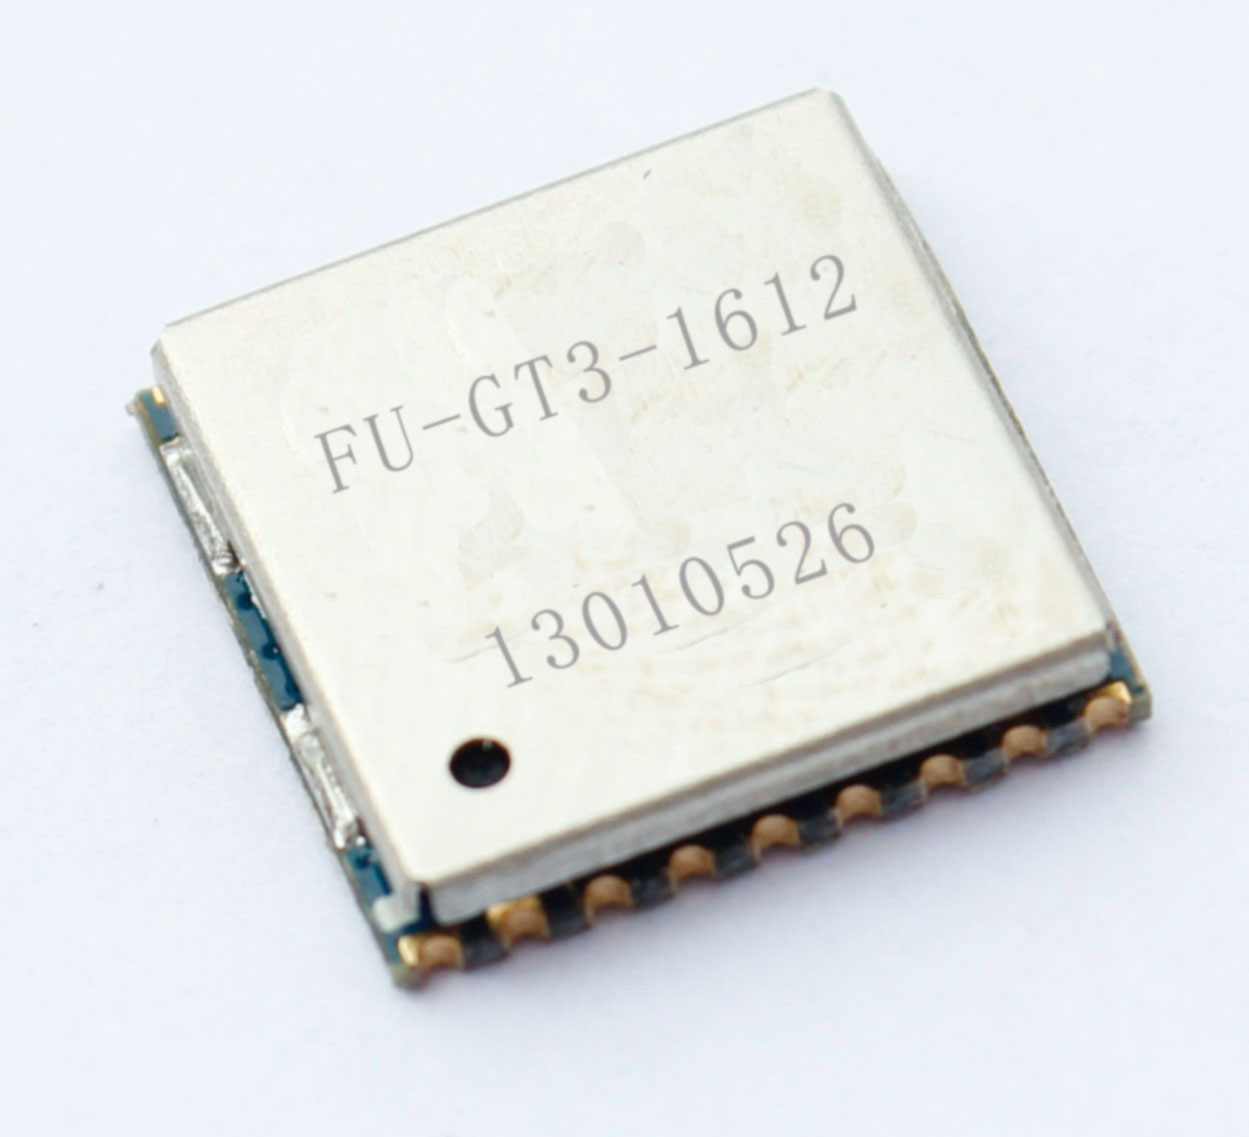 GPS车载导航模组FU-GT3-1612